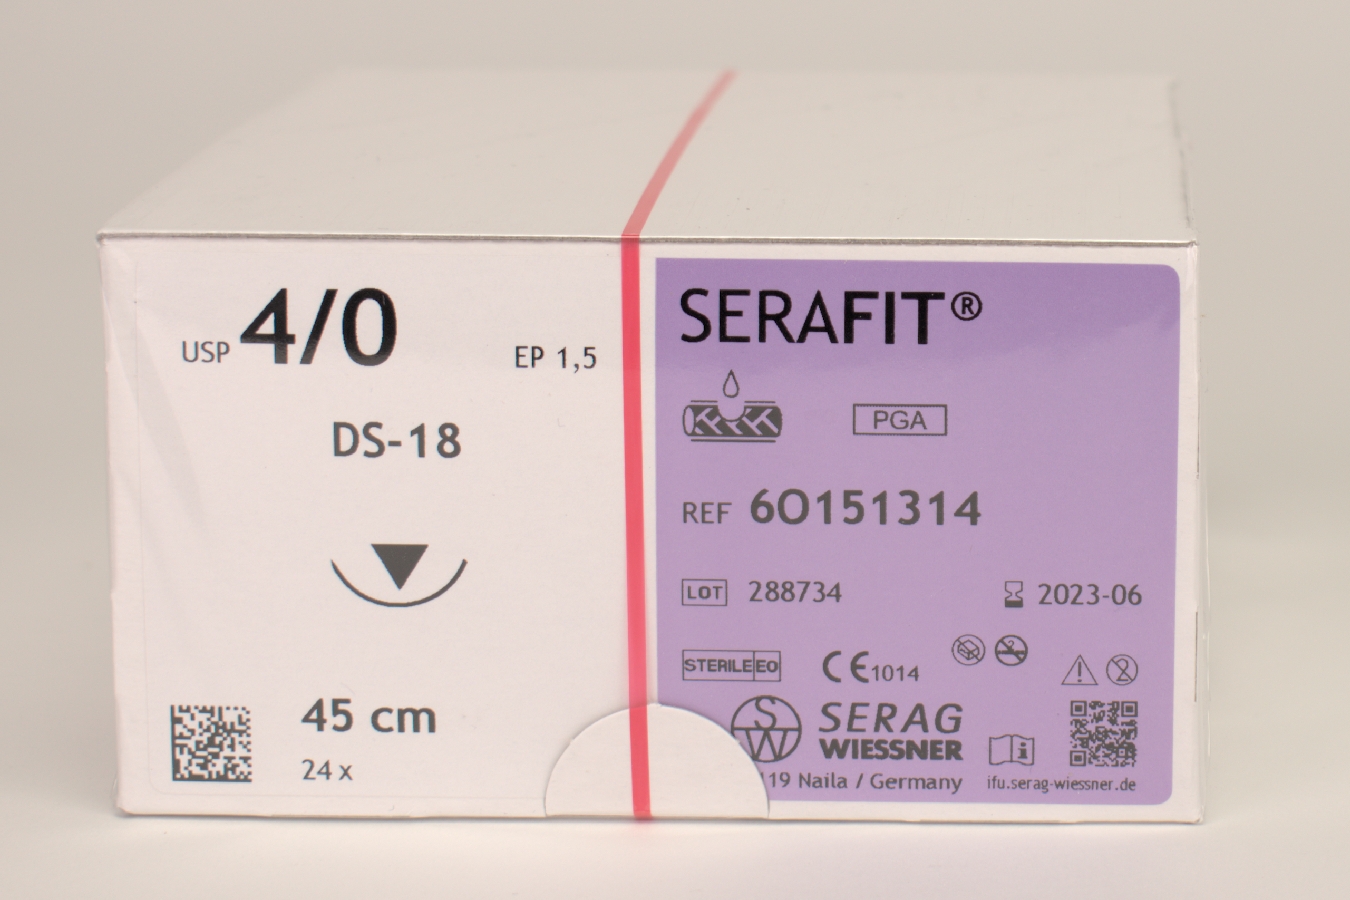 Serafit violett  EP 1,5  DS-18  2Dtz